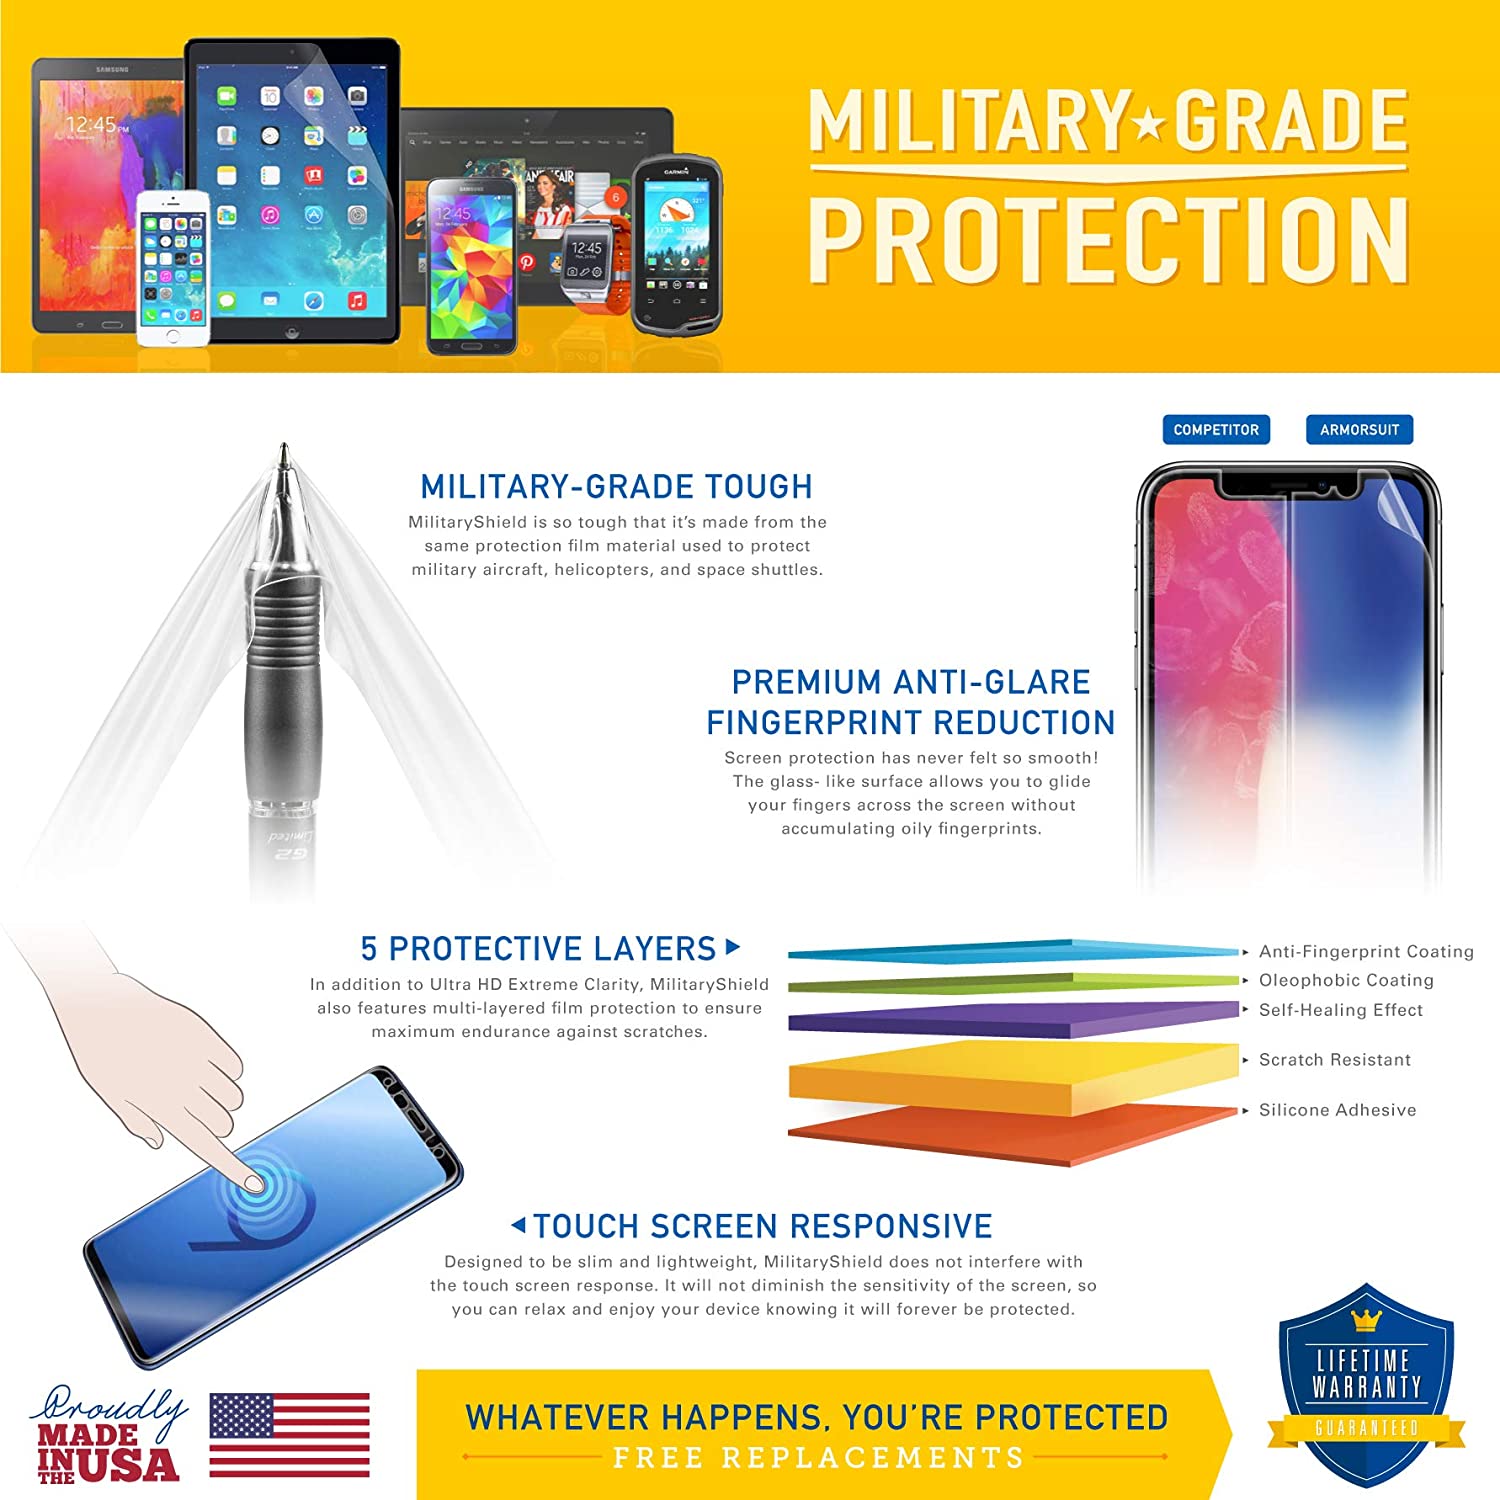 Samsung Gear S2 3G Screen Protector + Full Body Skin Protector